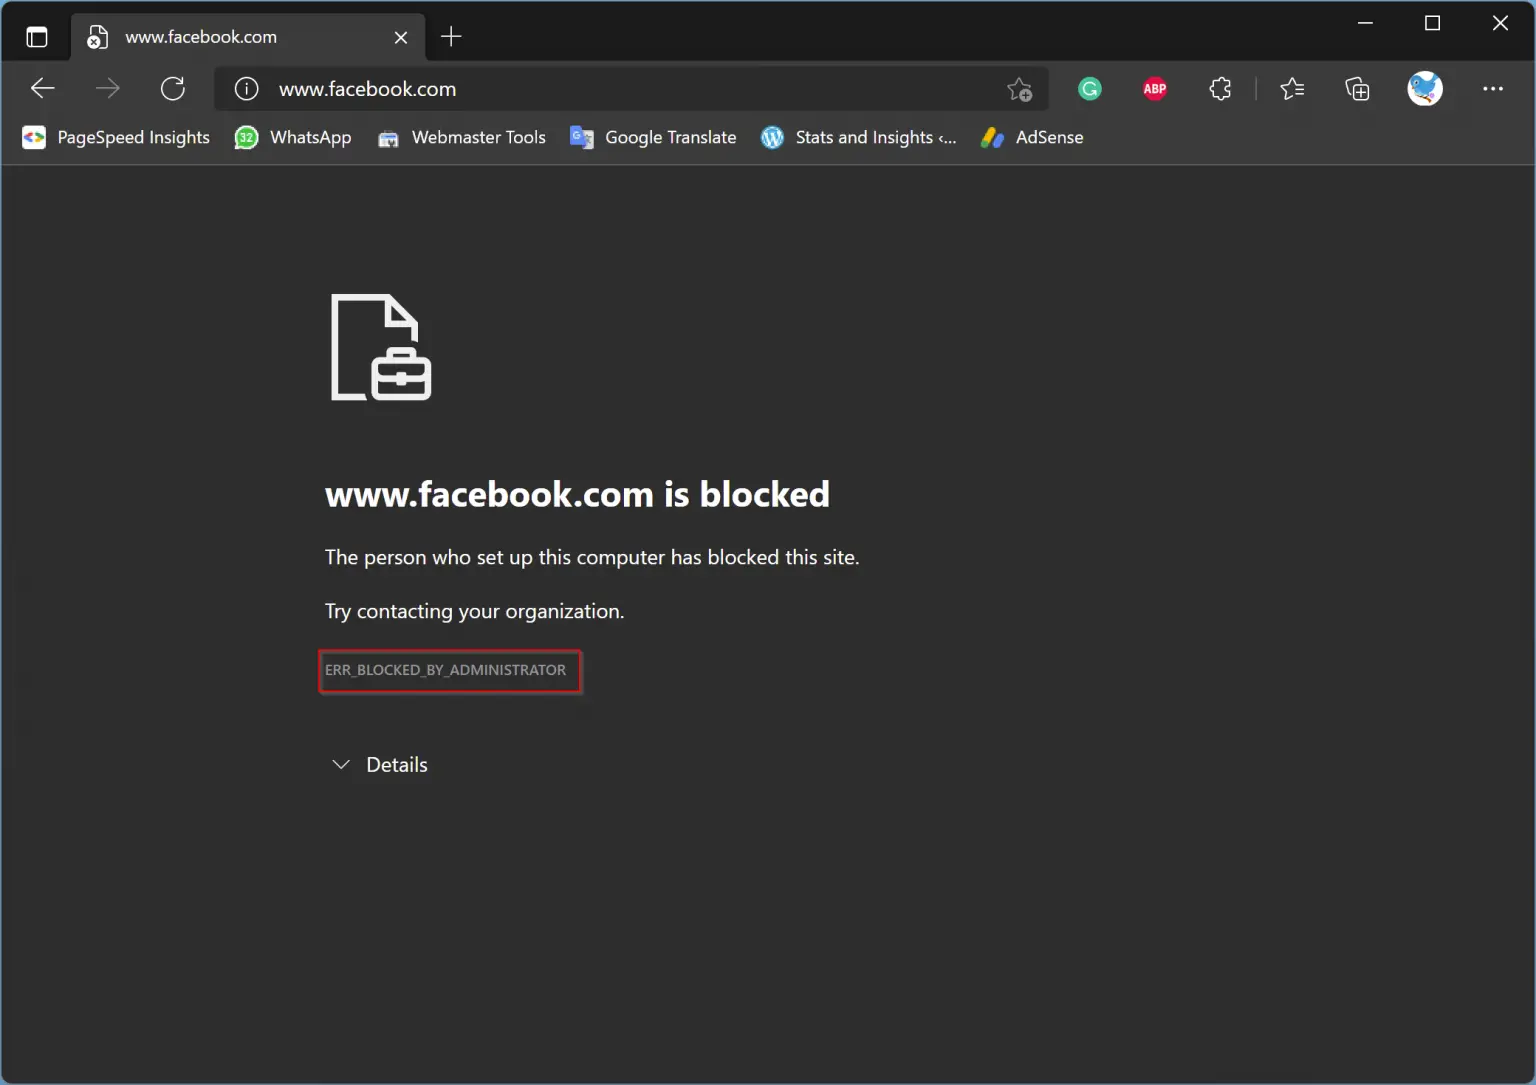 Blocked website message